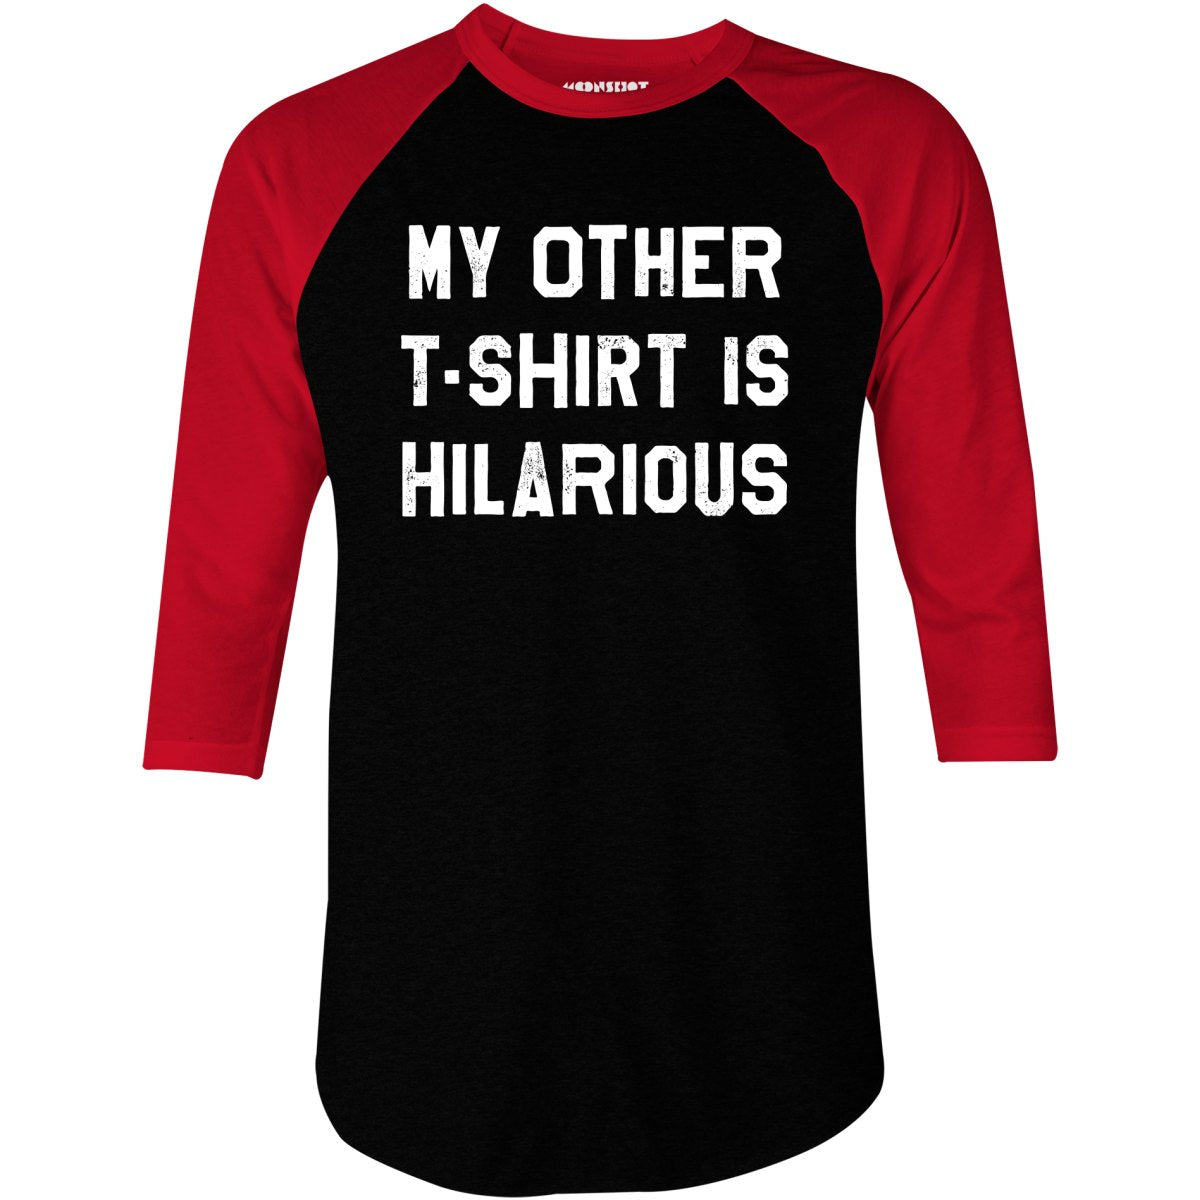 My Other T-Shirt is Hilarious - 3/4 Sleeve Raglan T-Shirt